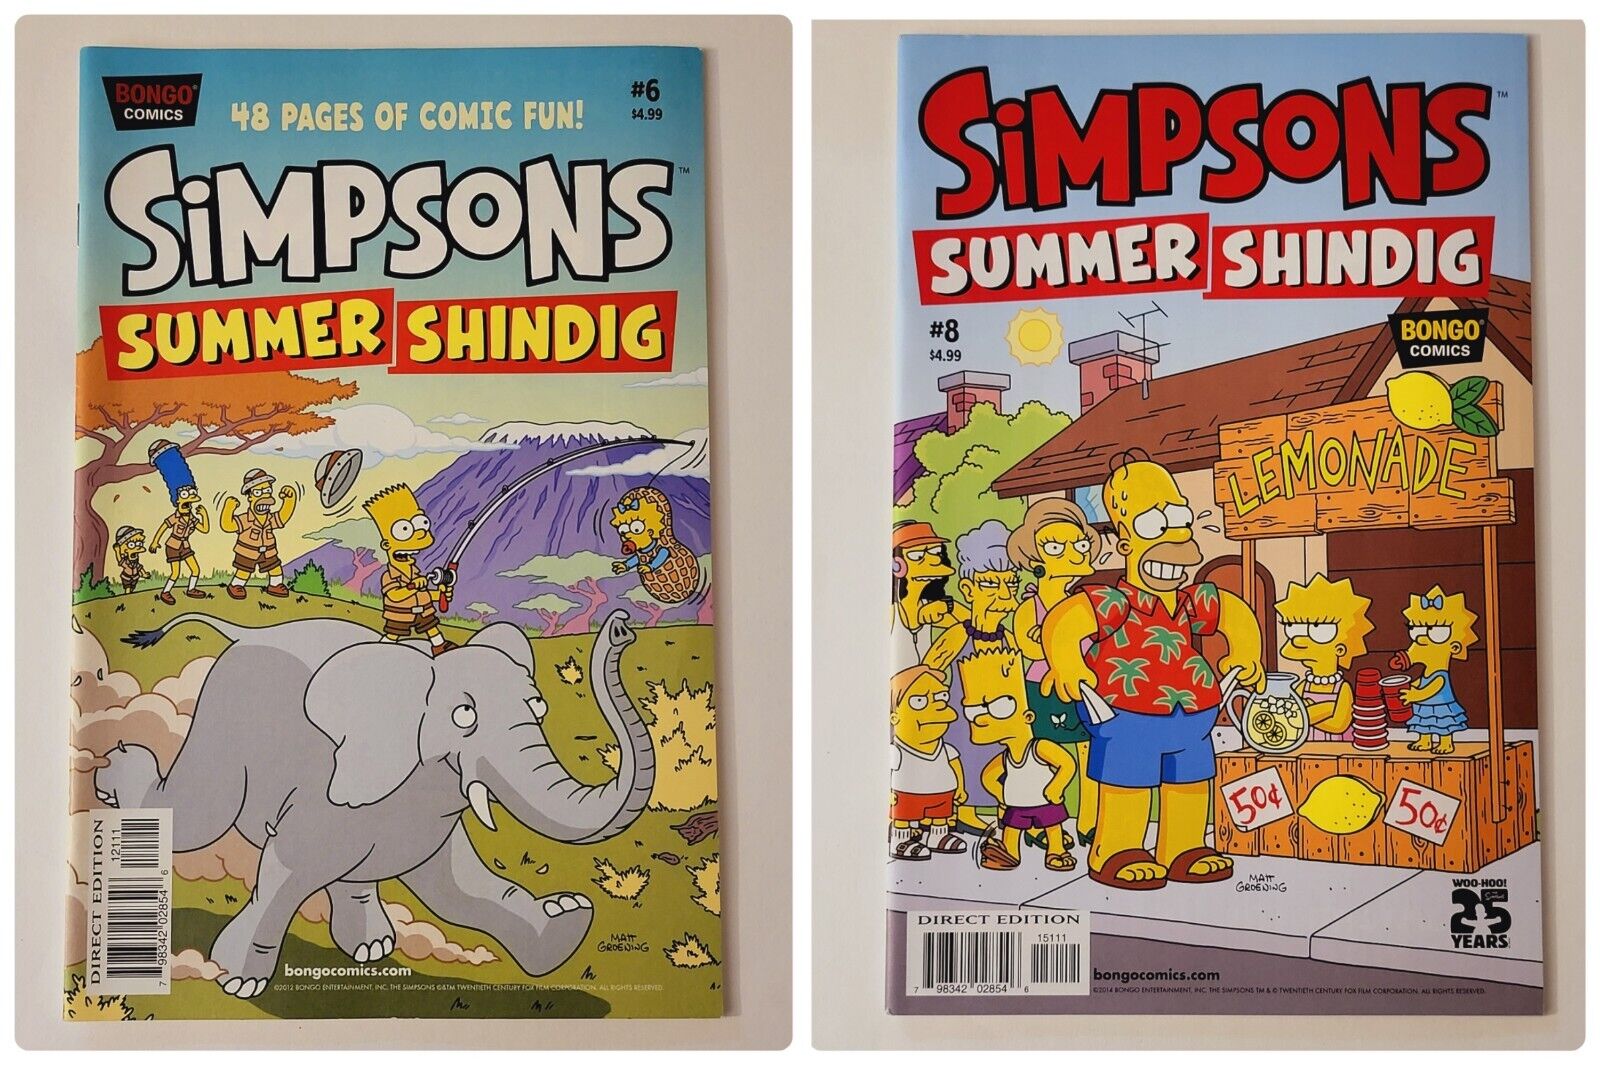 2012 2014 Bongo The Simpsons Summer Shindig Comic Lot x2 NM #6 & #8 Bagged/Board